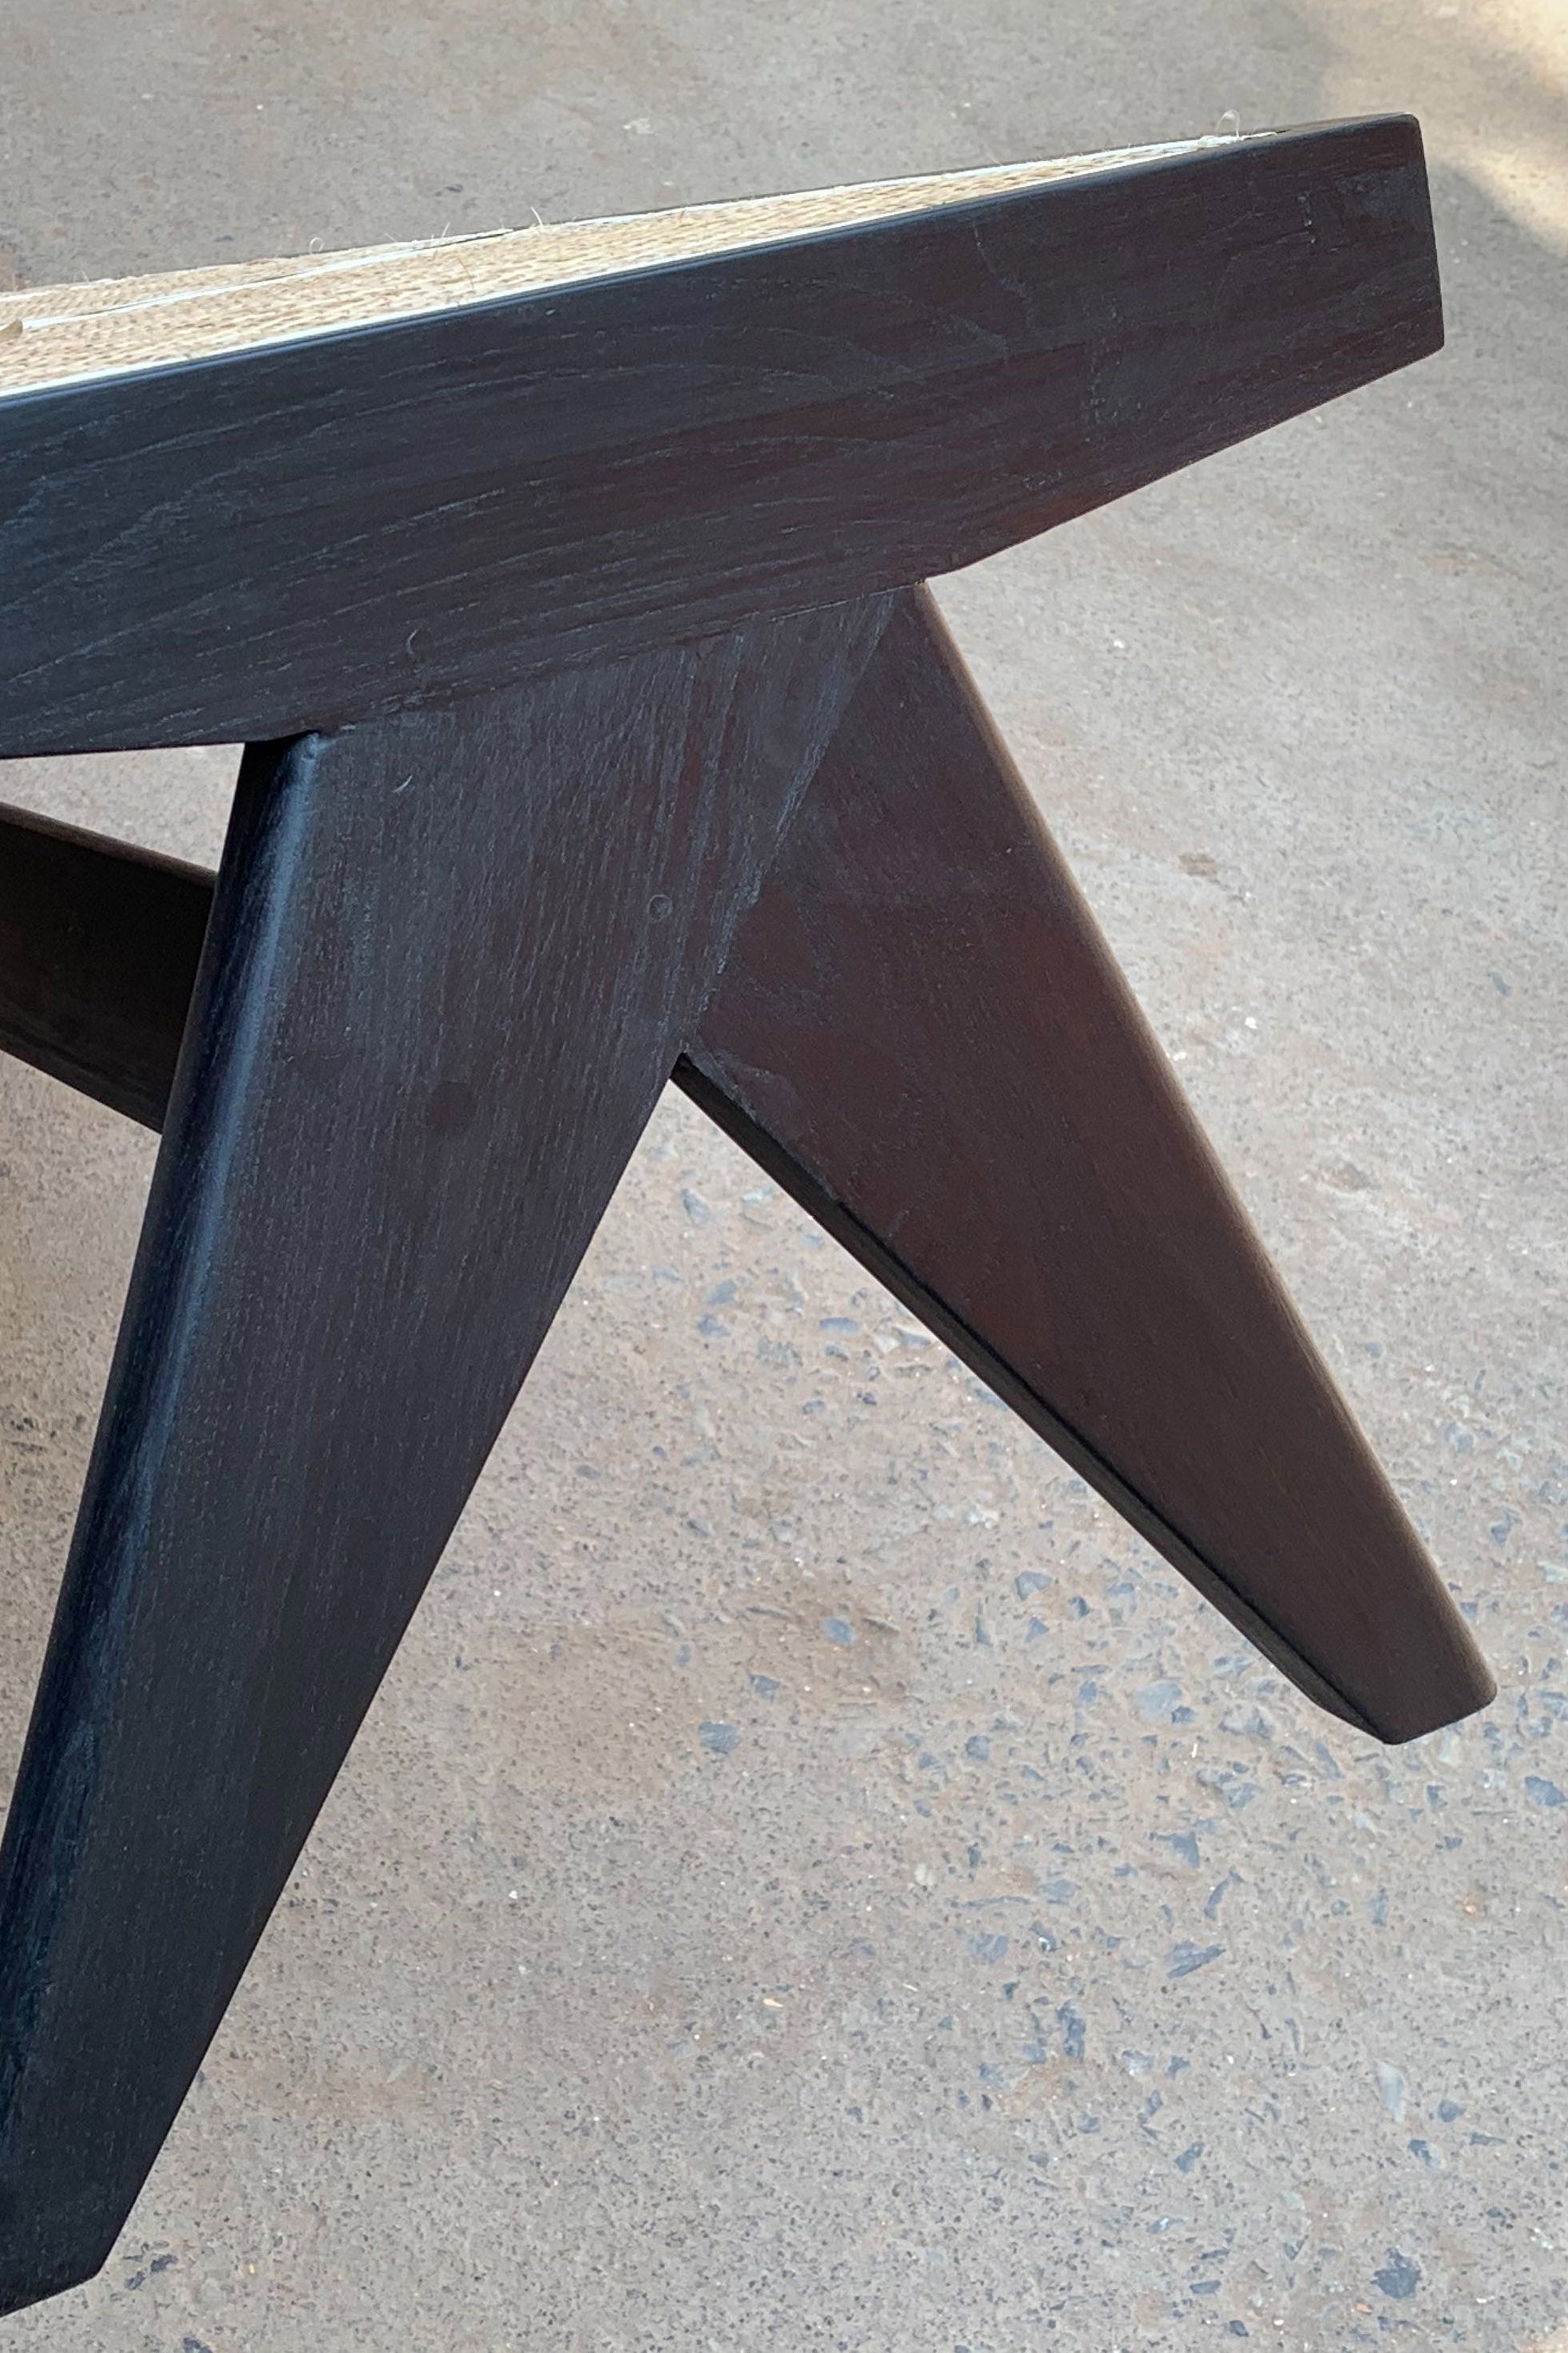 Pierre Jeanneret Kangaroo chair - The Design Part